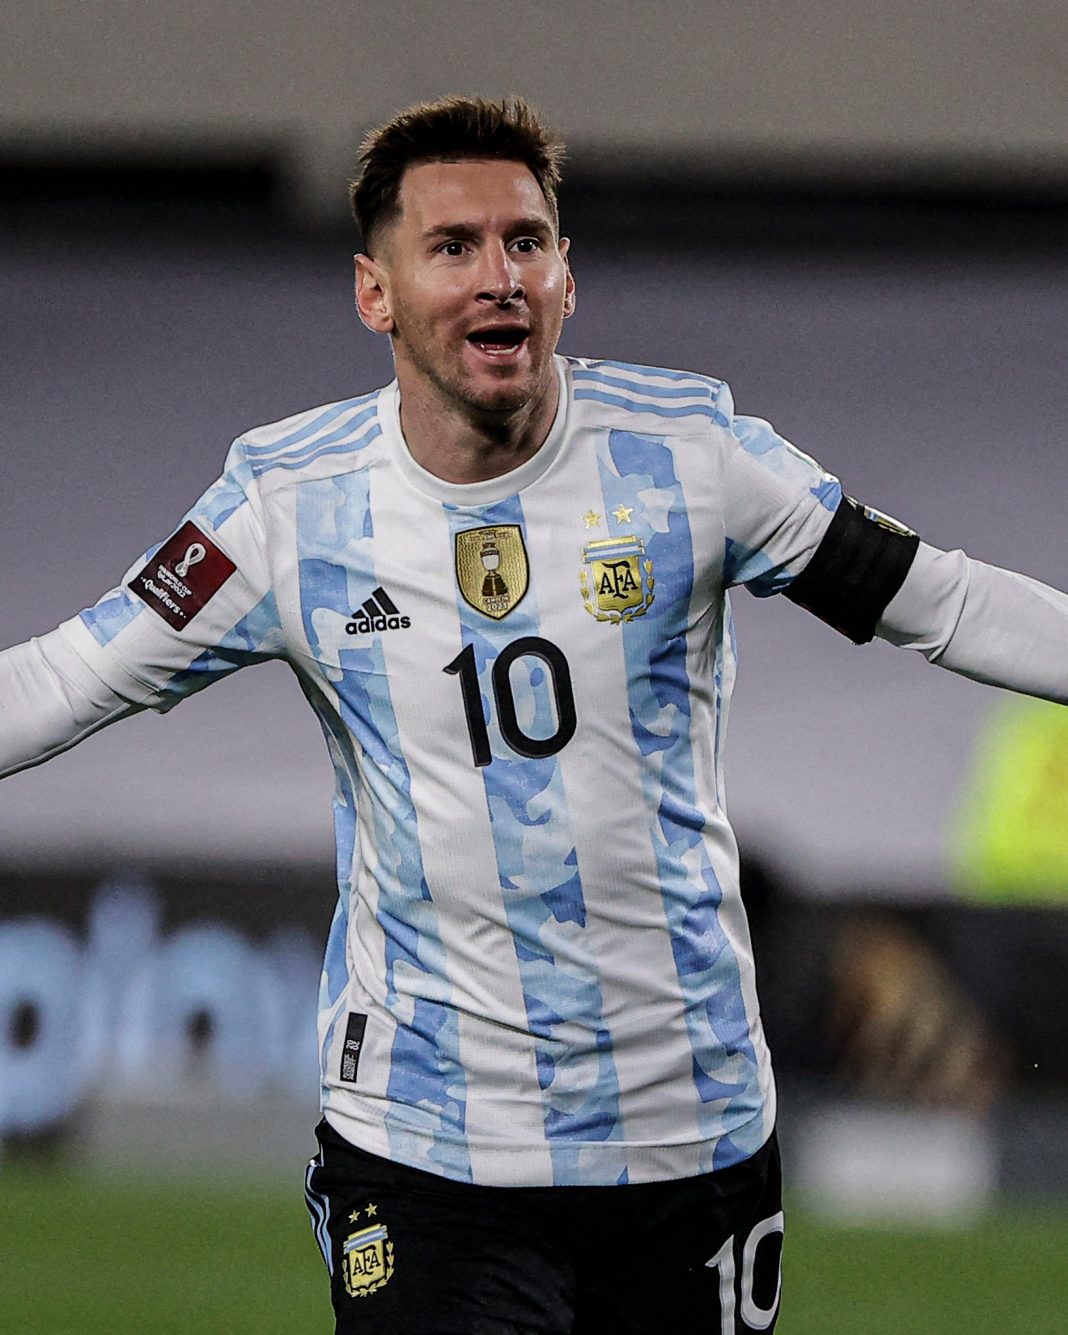 Messi supera a Pelé como máximo goleador de selecciones en Sudamérica